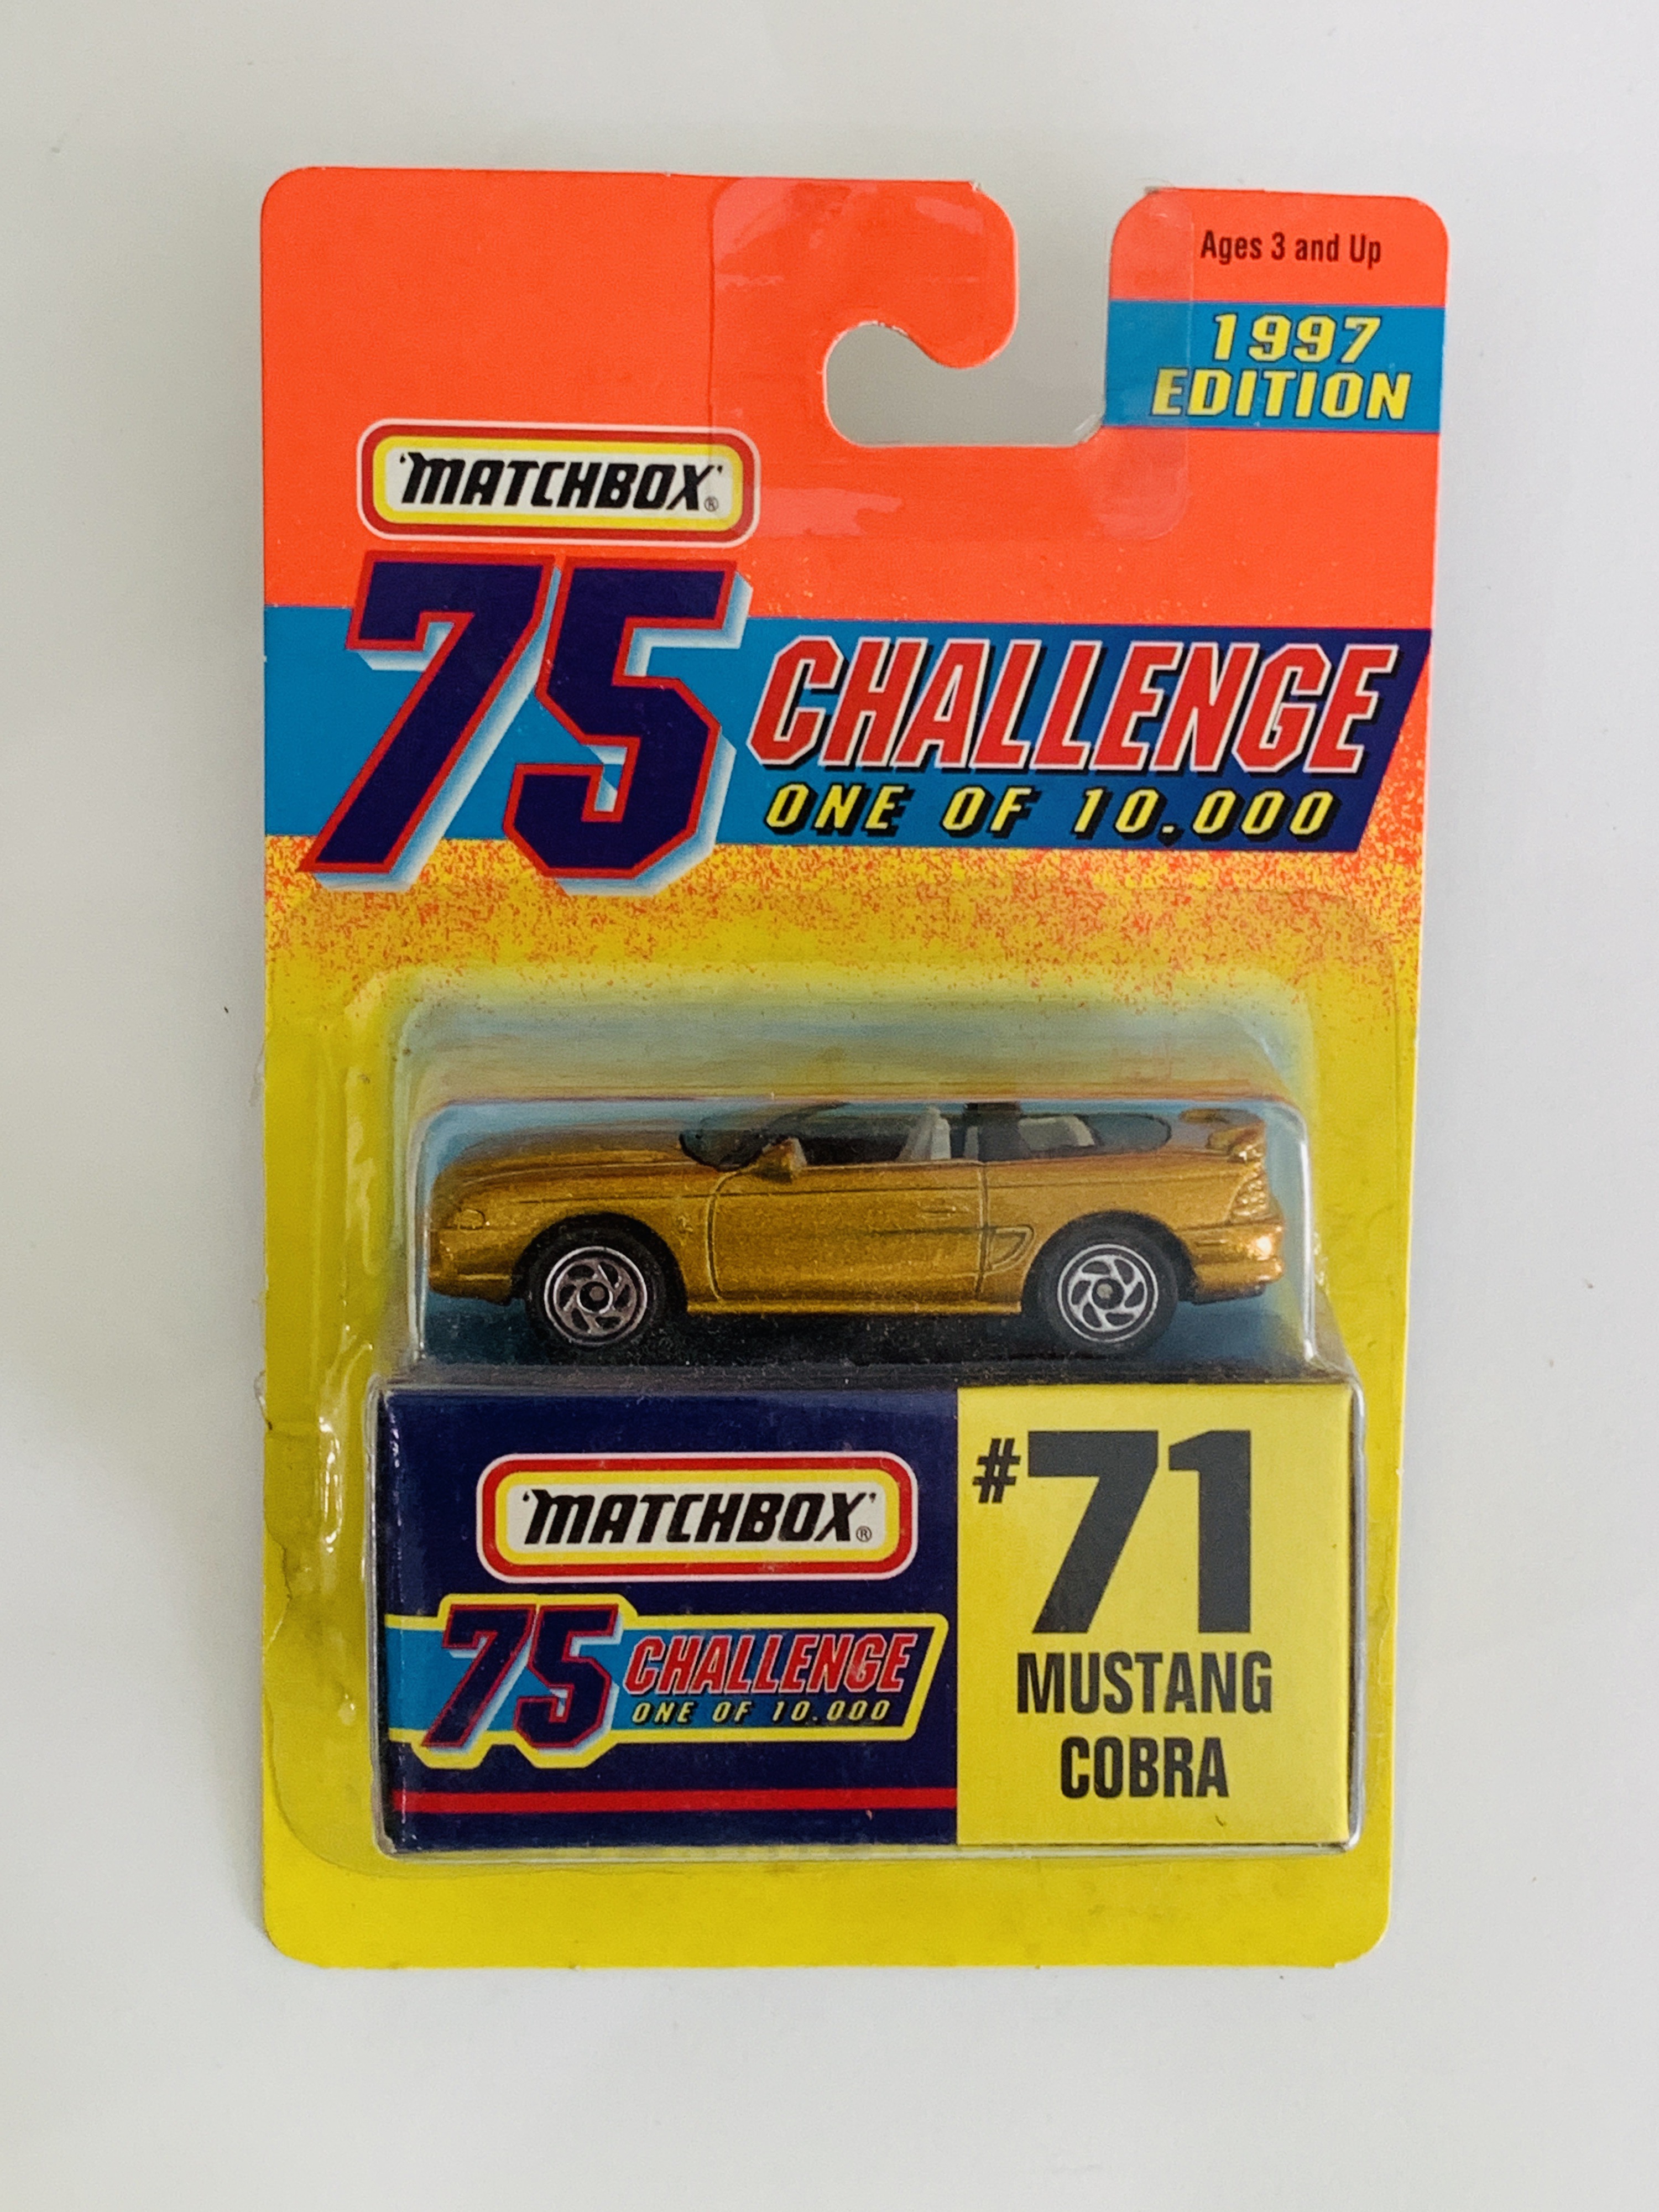 Matchbox Challenge #71 Mustang Cobra